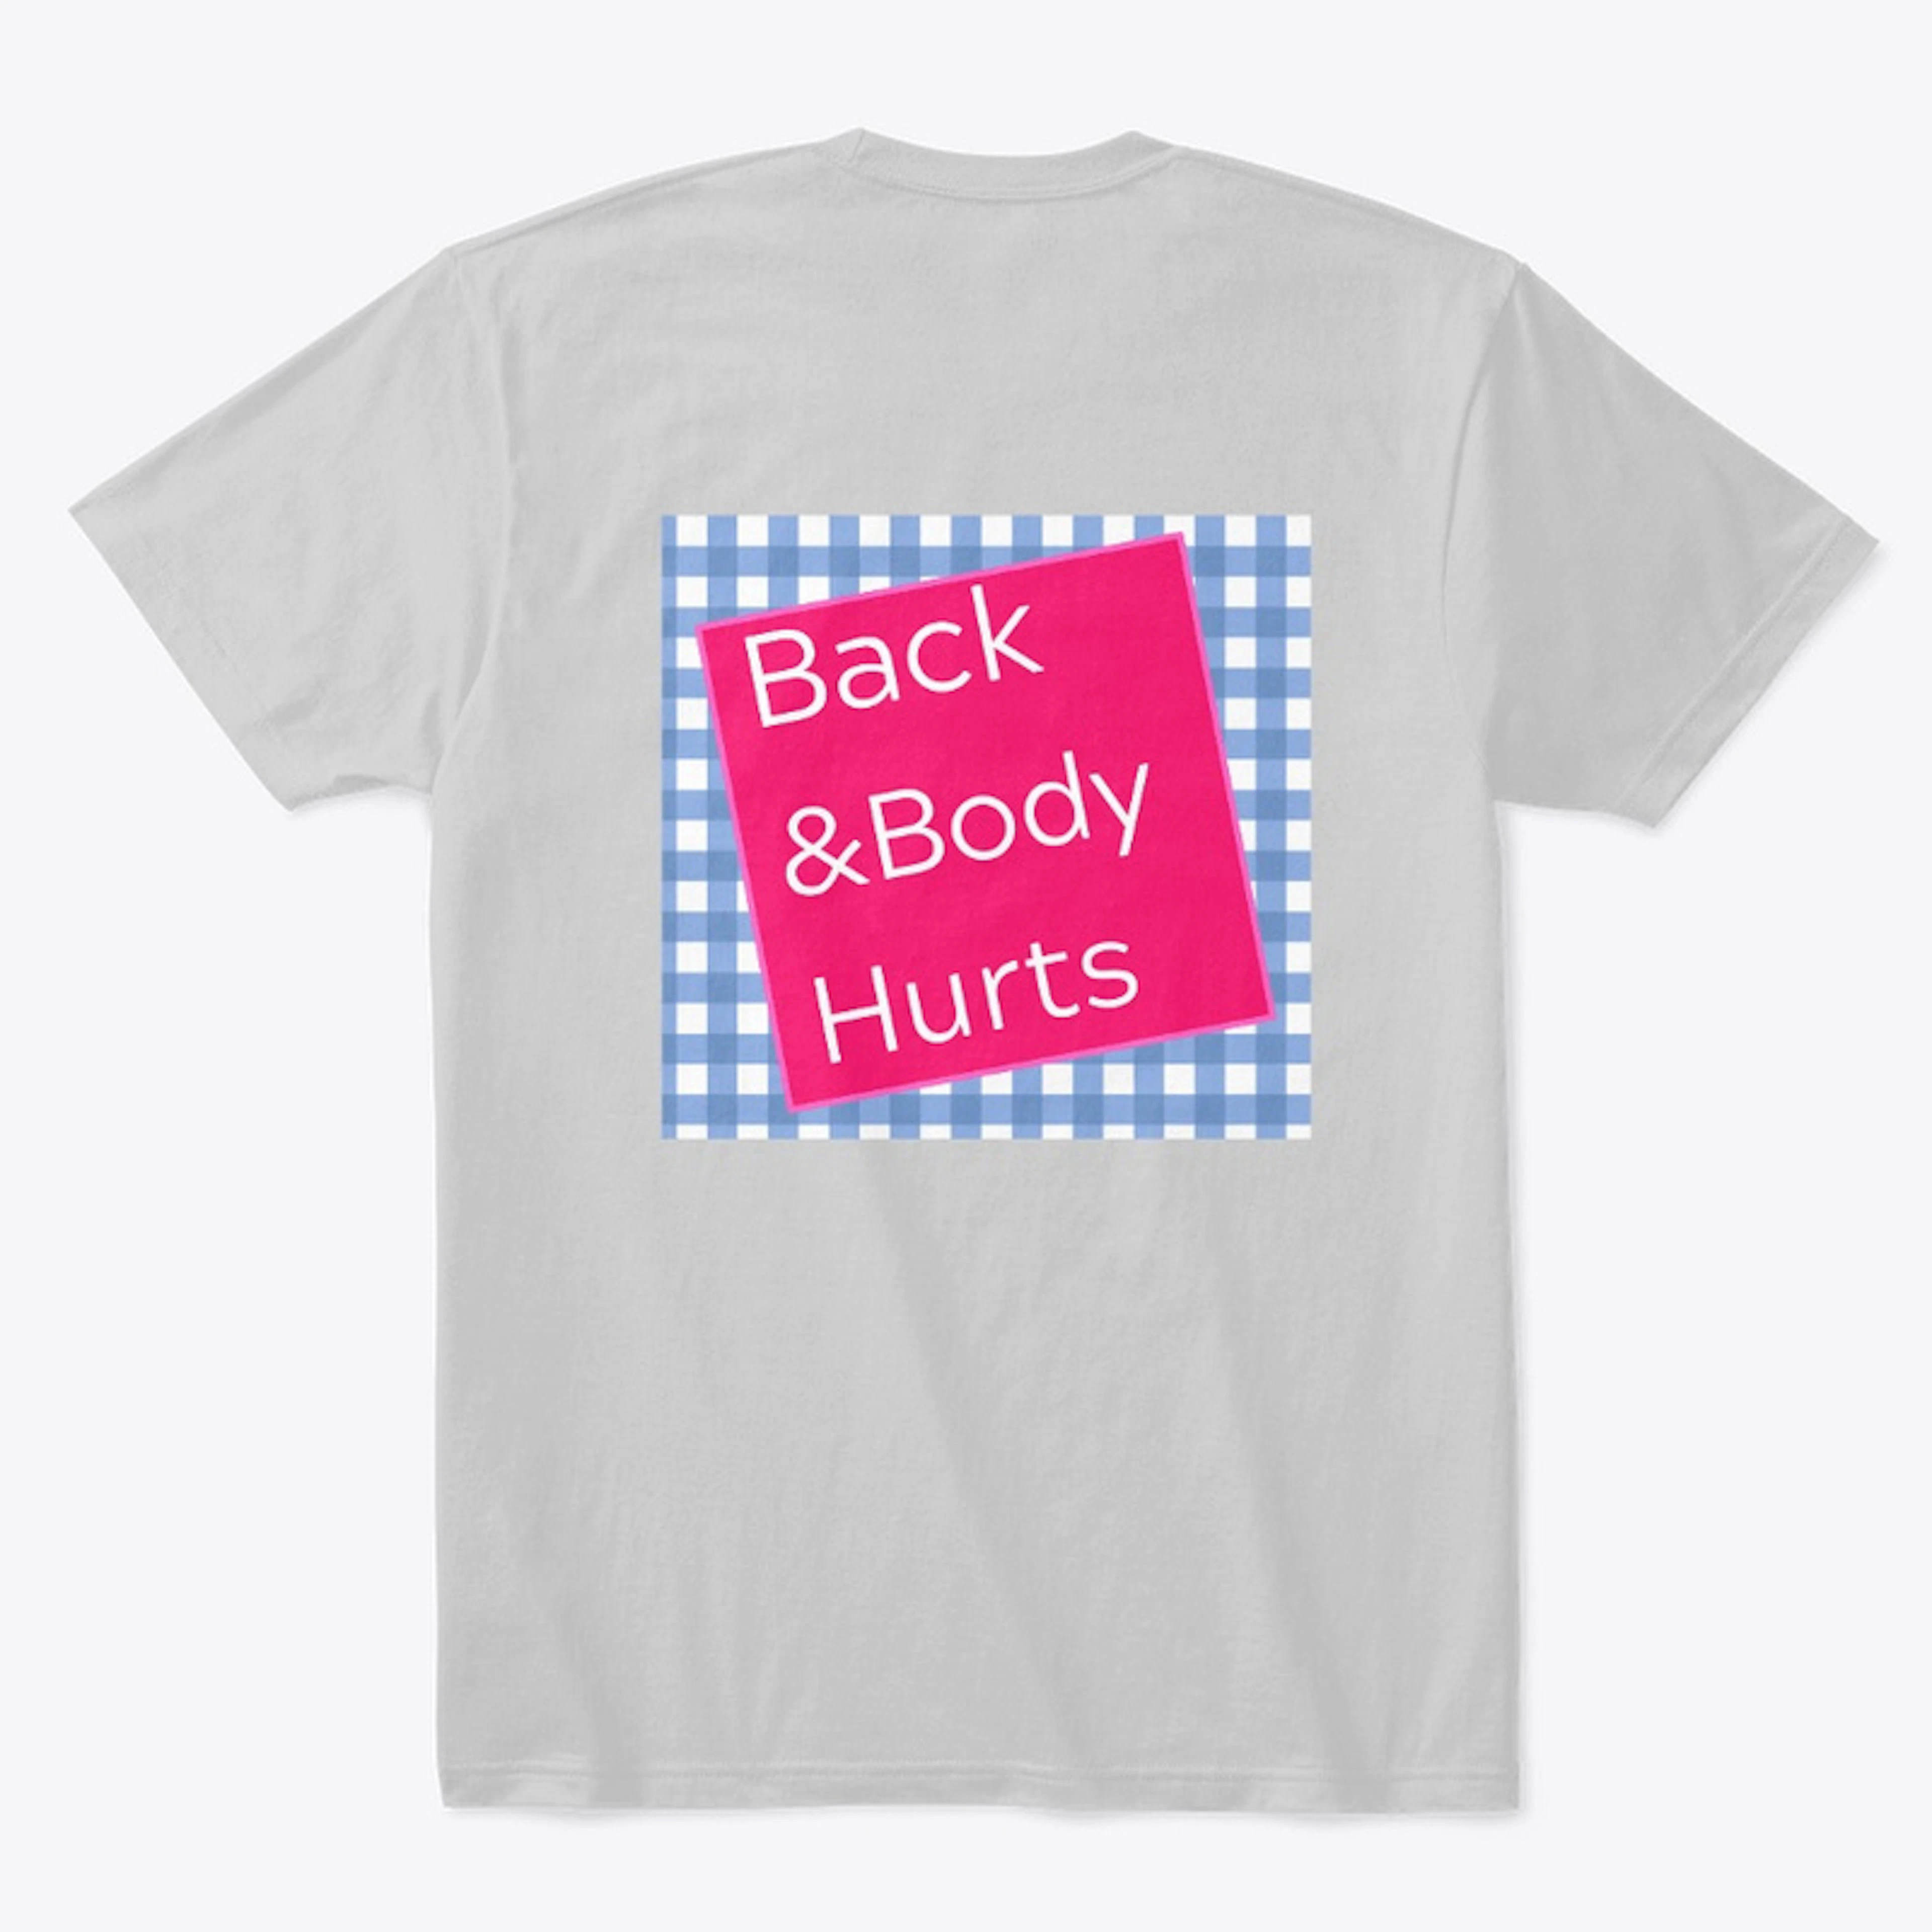 Back &Body Hurts shirt